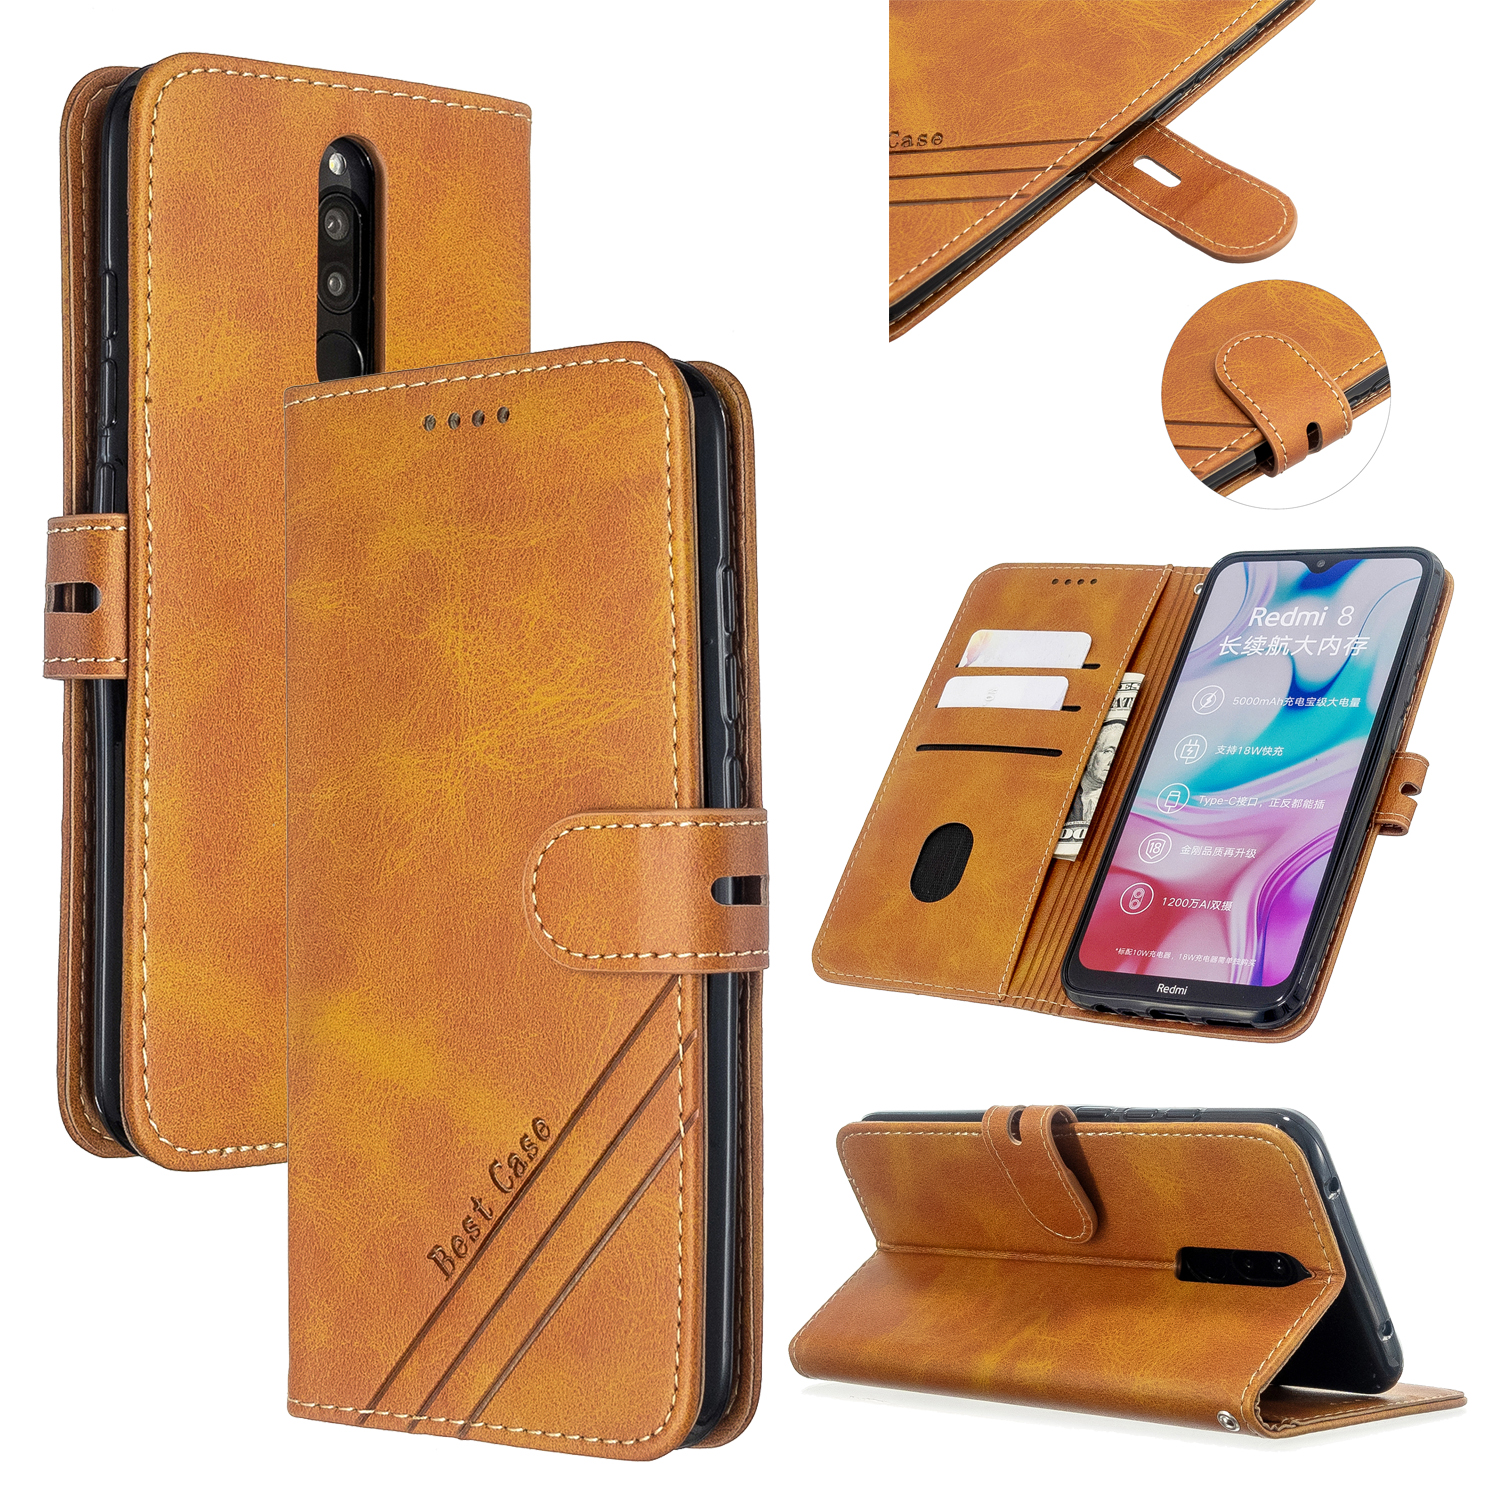 For Redmi Note 8T/Redmi 8/Redmi 8A Case Soft Leather Cover with Denim Texture Precise Cutouts Wallet Design Buckle Closure Smartphone Shell  yellow